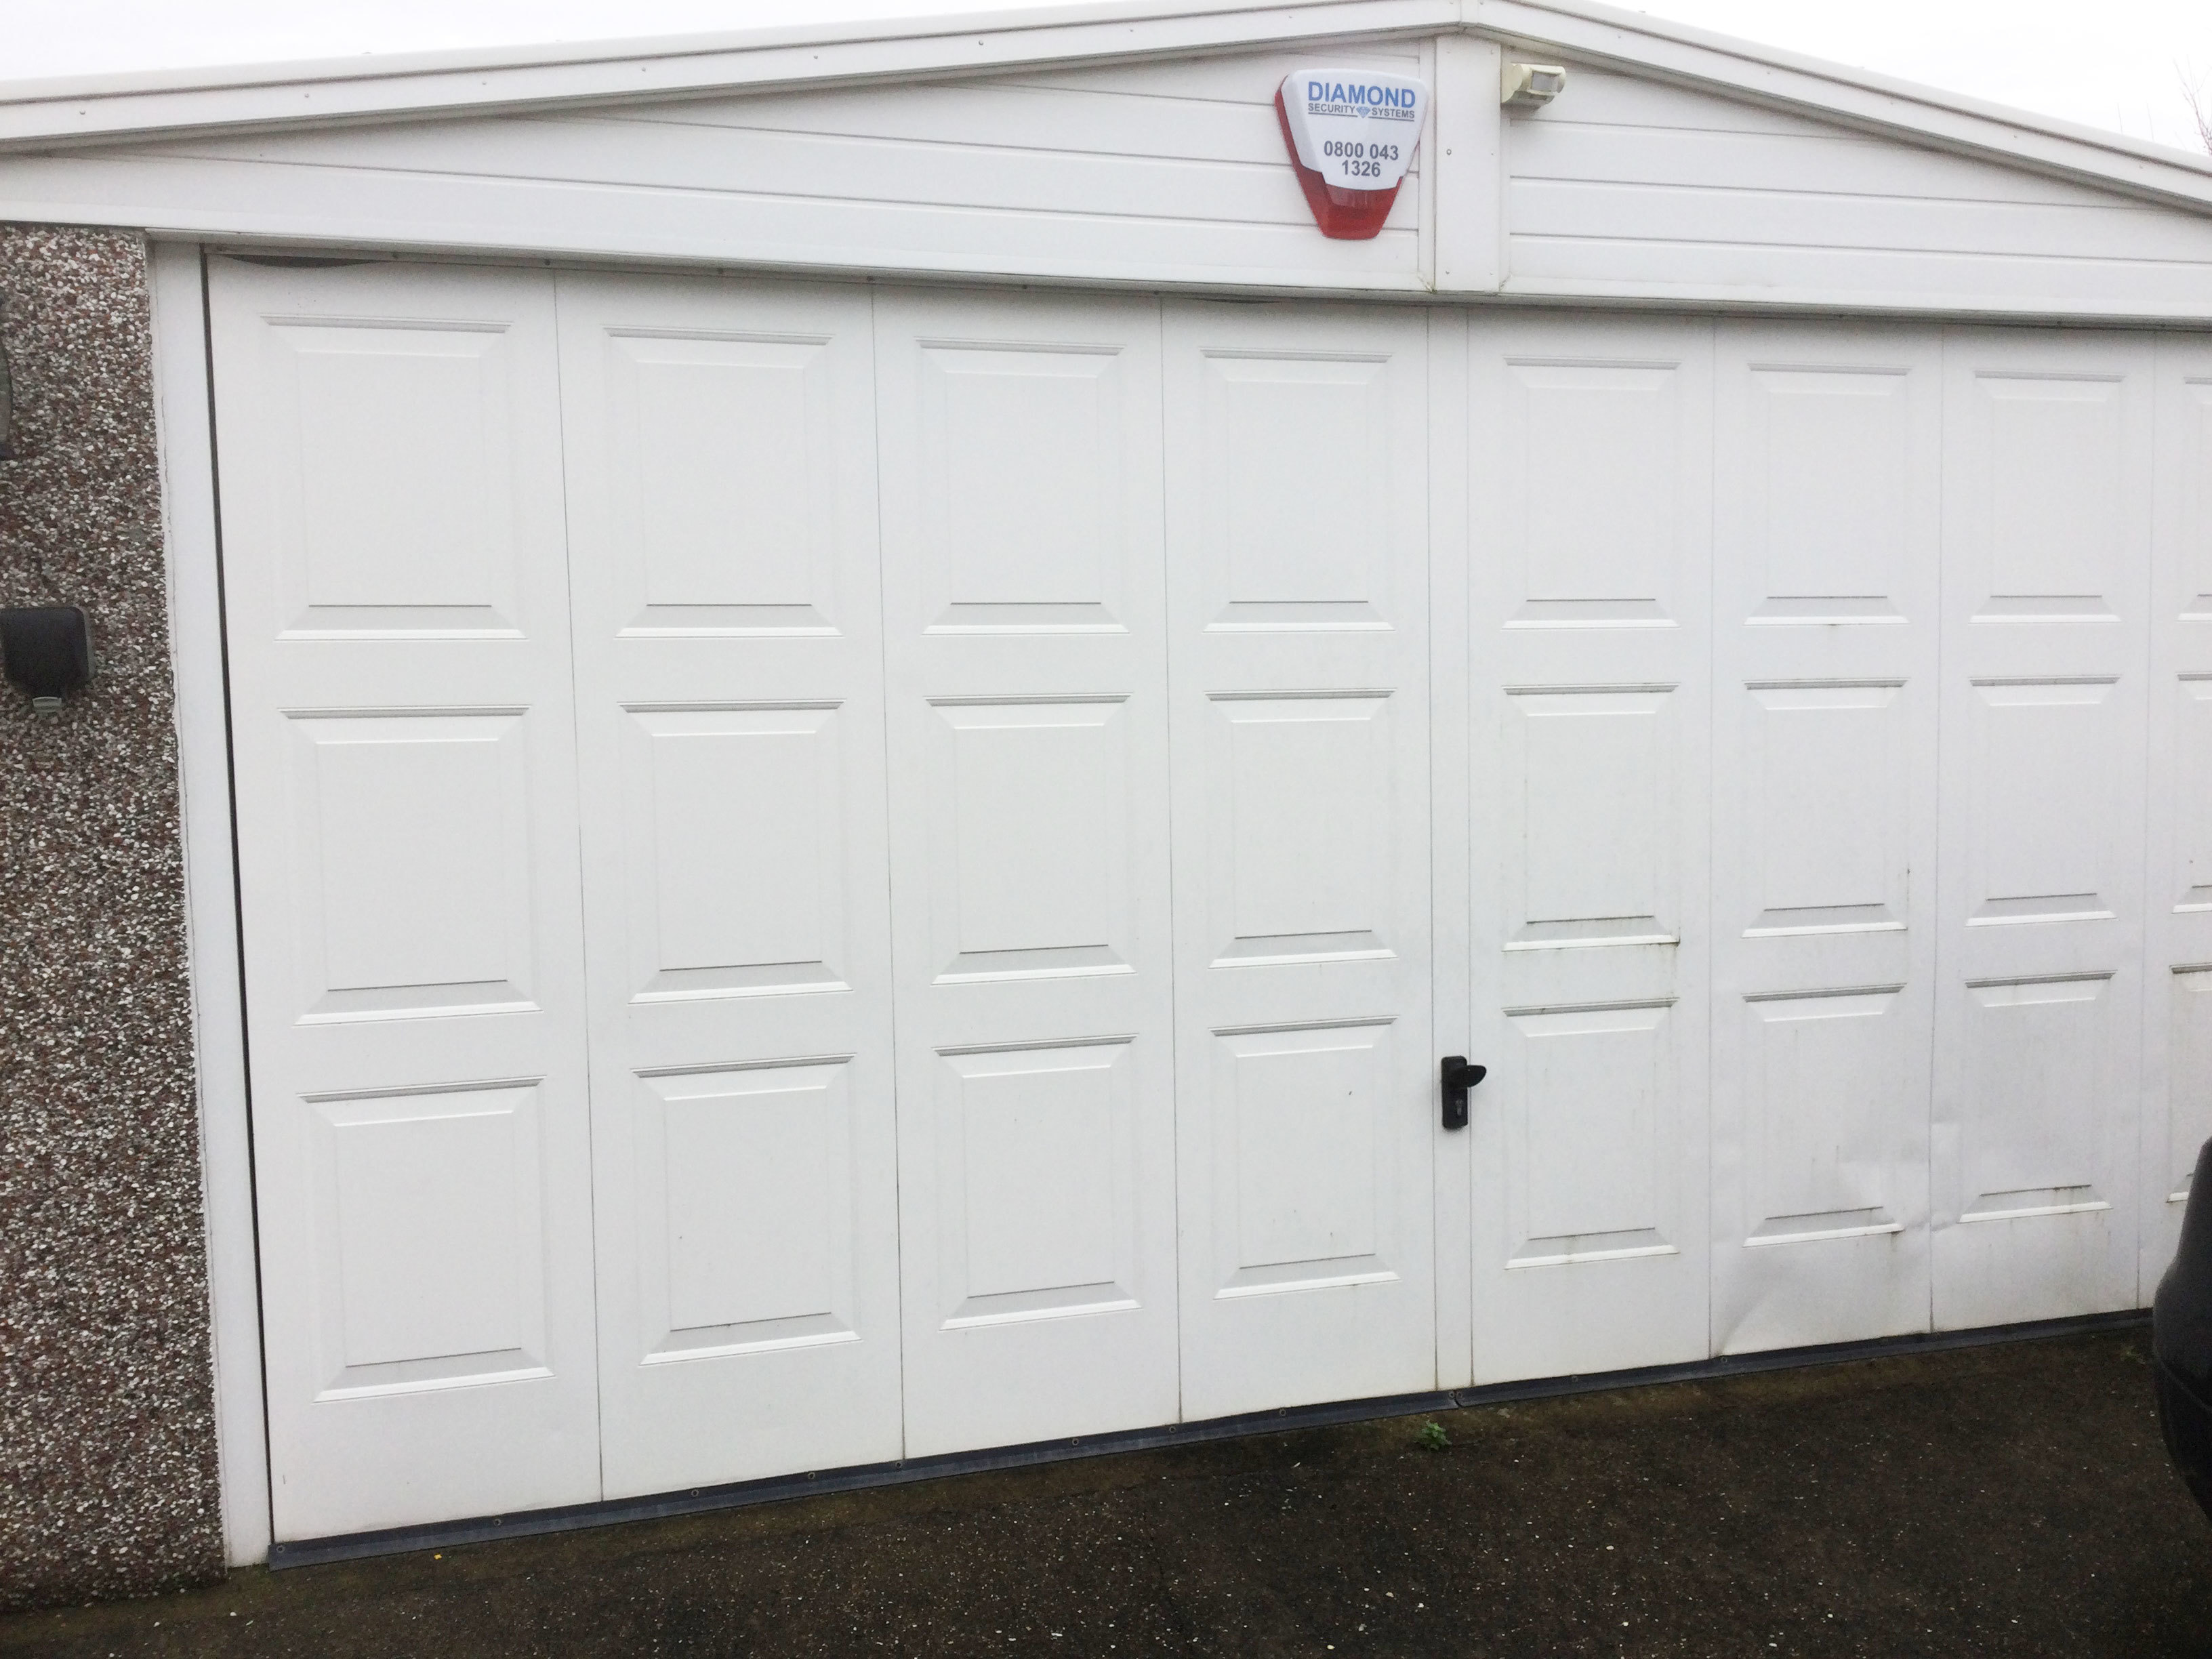 White Georgian Sectional Garage Door, Harrogate